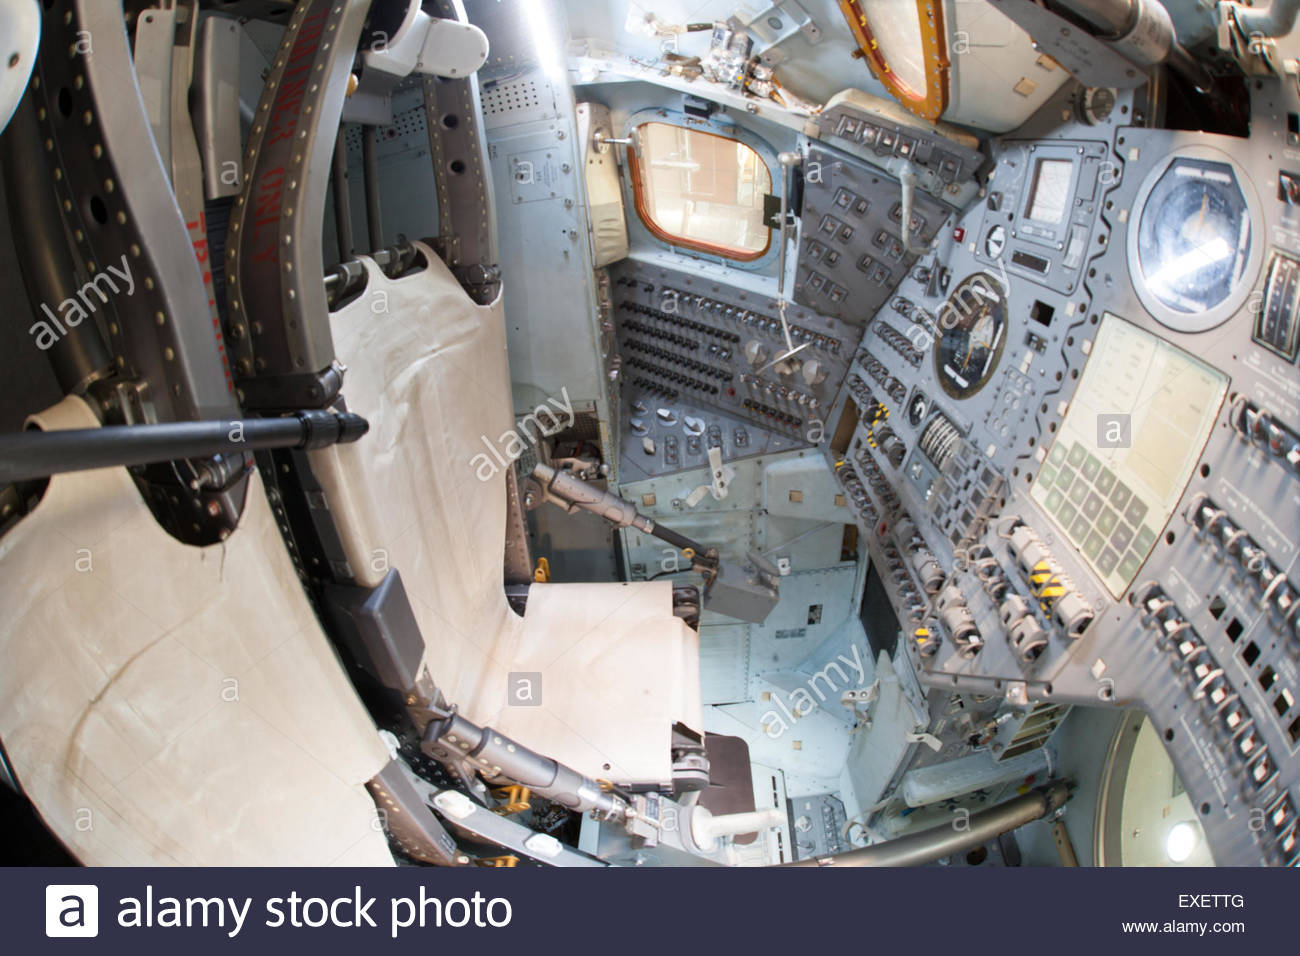 apollo-9-command-module-gumdrop-interior-EXETTG.jpg